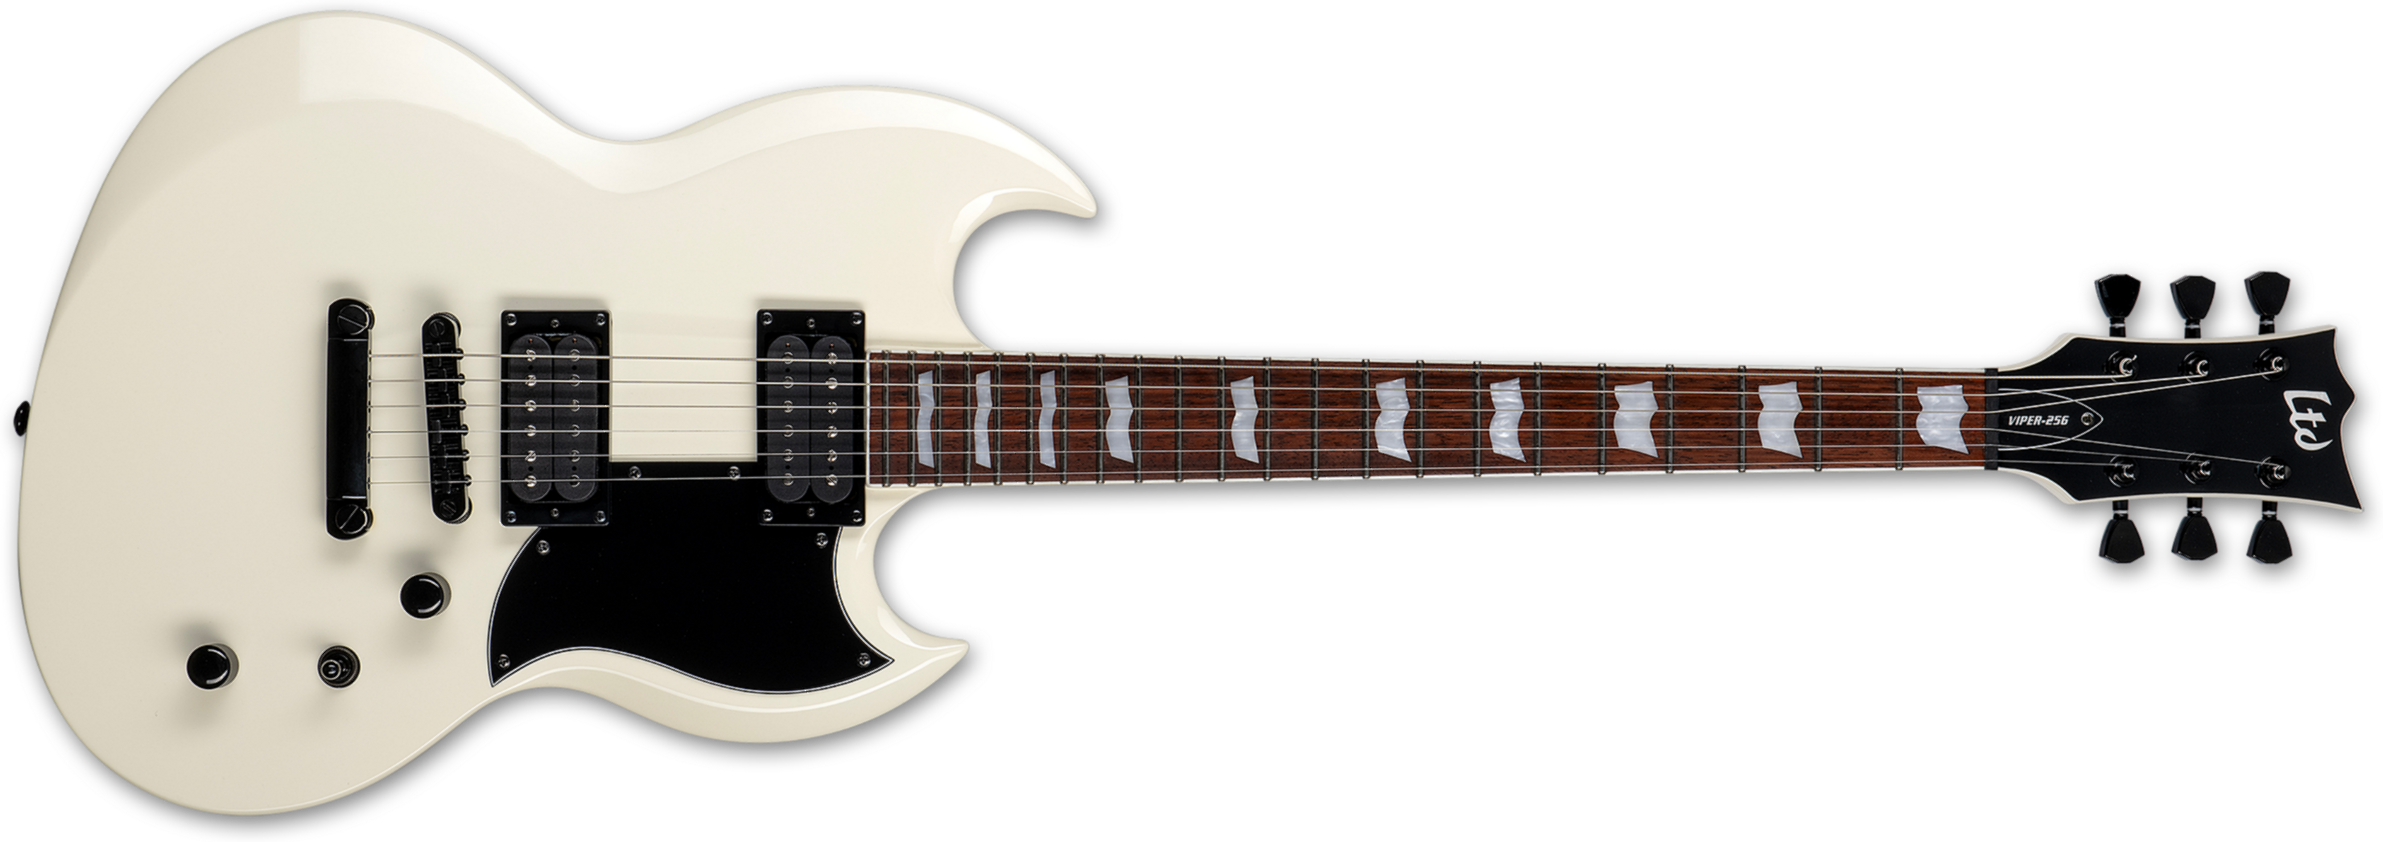 Ltd Viper-256 Hh Jat - Olympic White - E-Gitarre aus Metall - Main picture